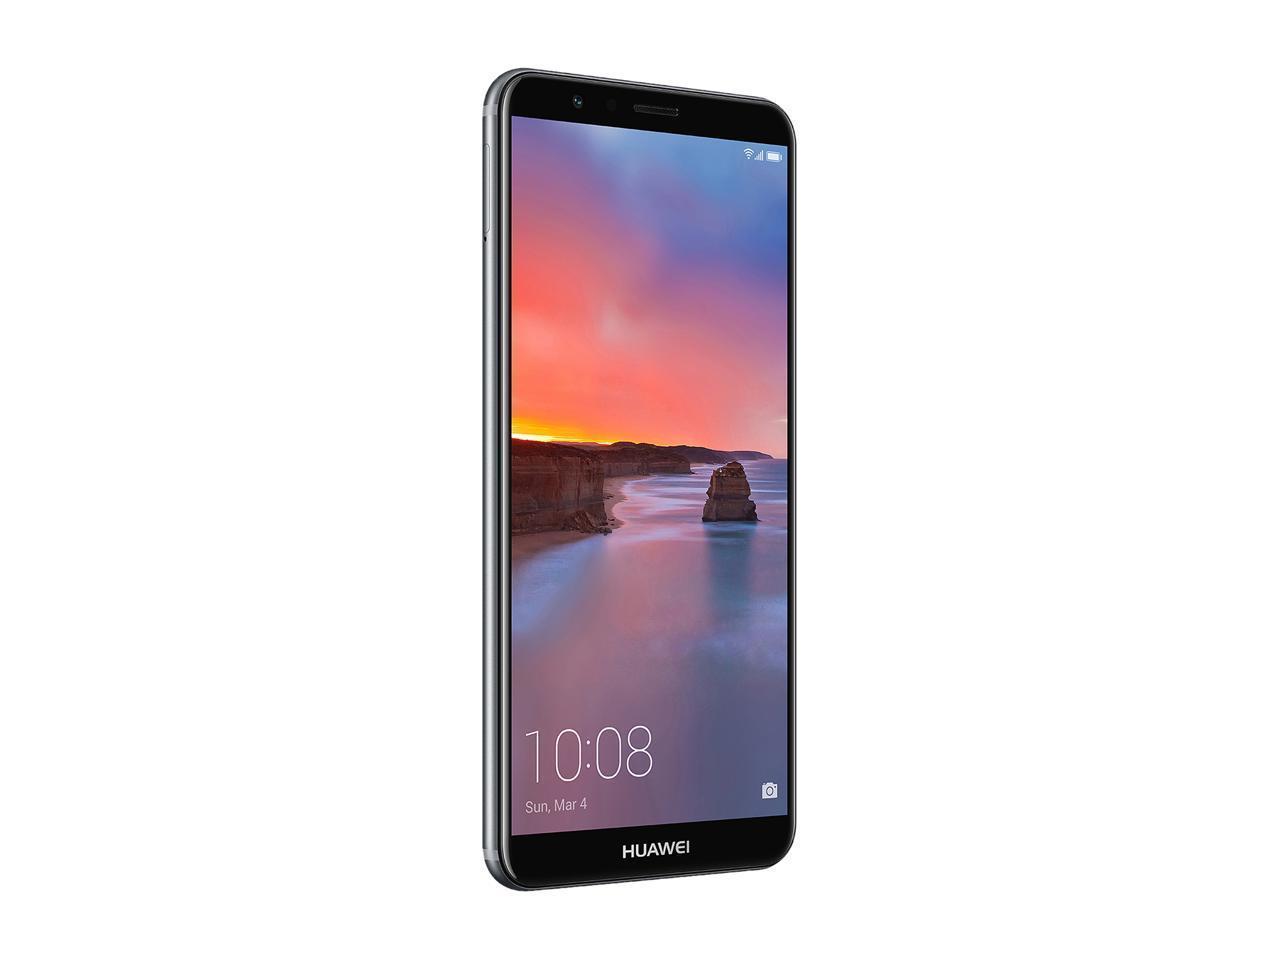 Huawei NEW Mate SE 4G LTE Unlocked Phone 51092DRH 4GB RAM 64GB 5.93'' Android 7